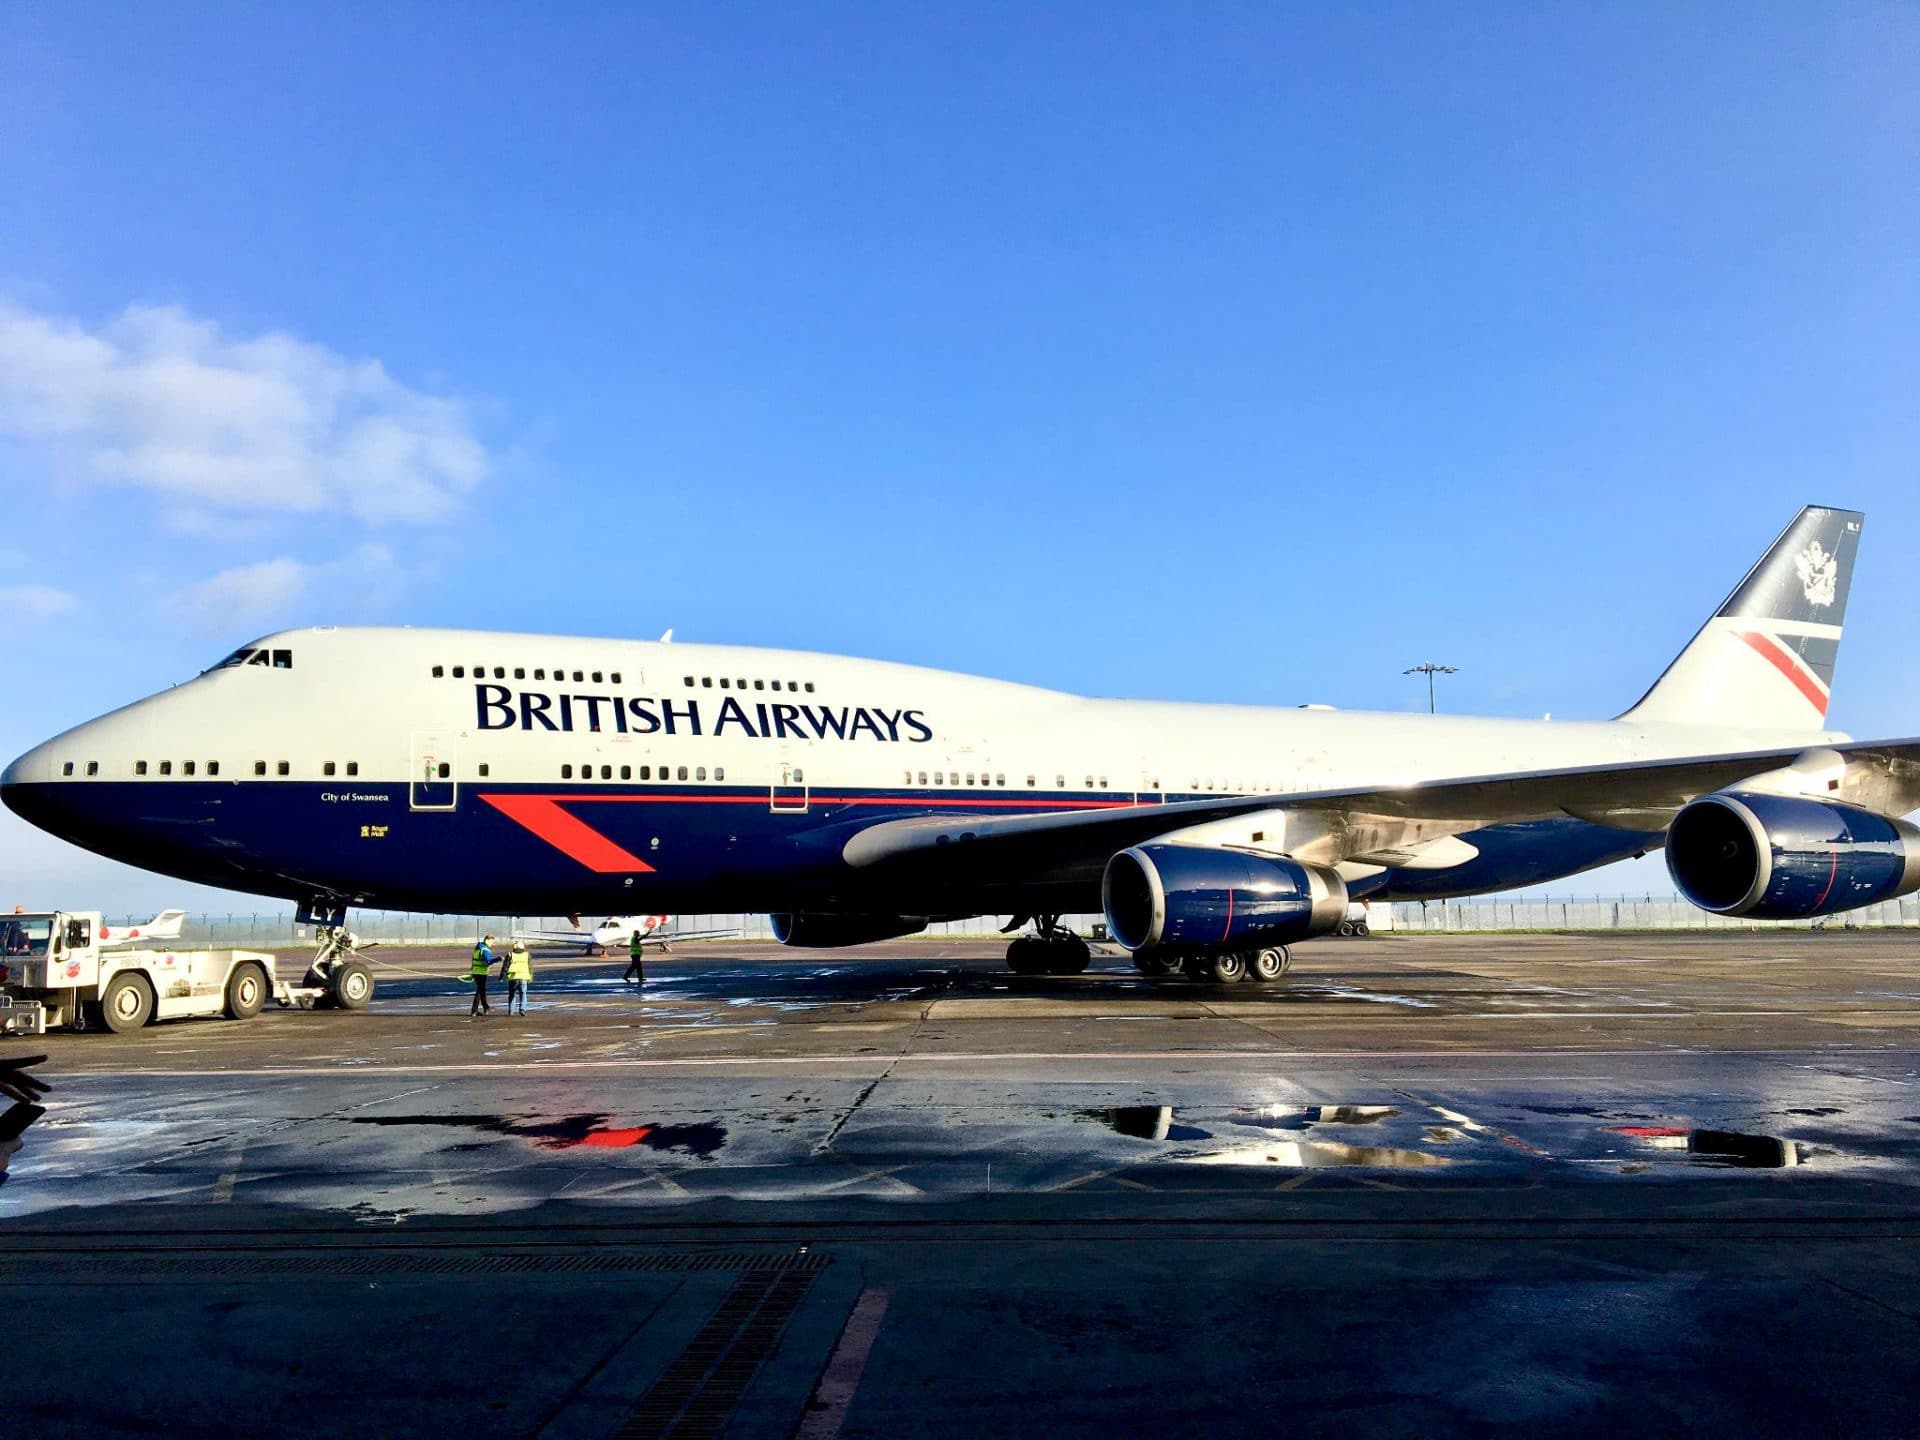 British Airways Boeing 747 In Landor Livery Has Landed At